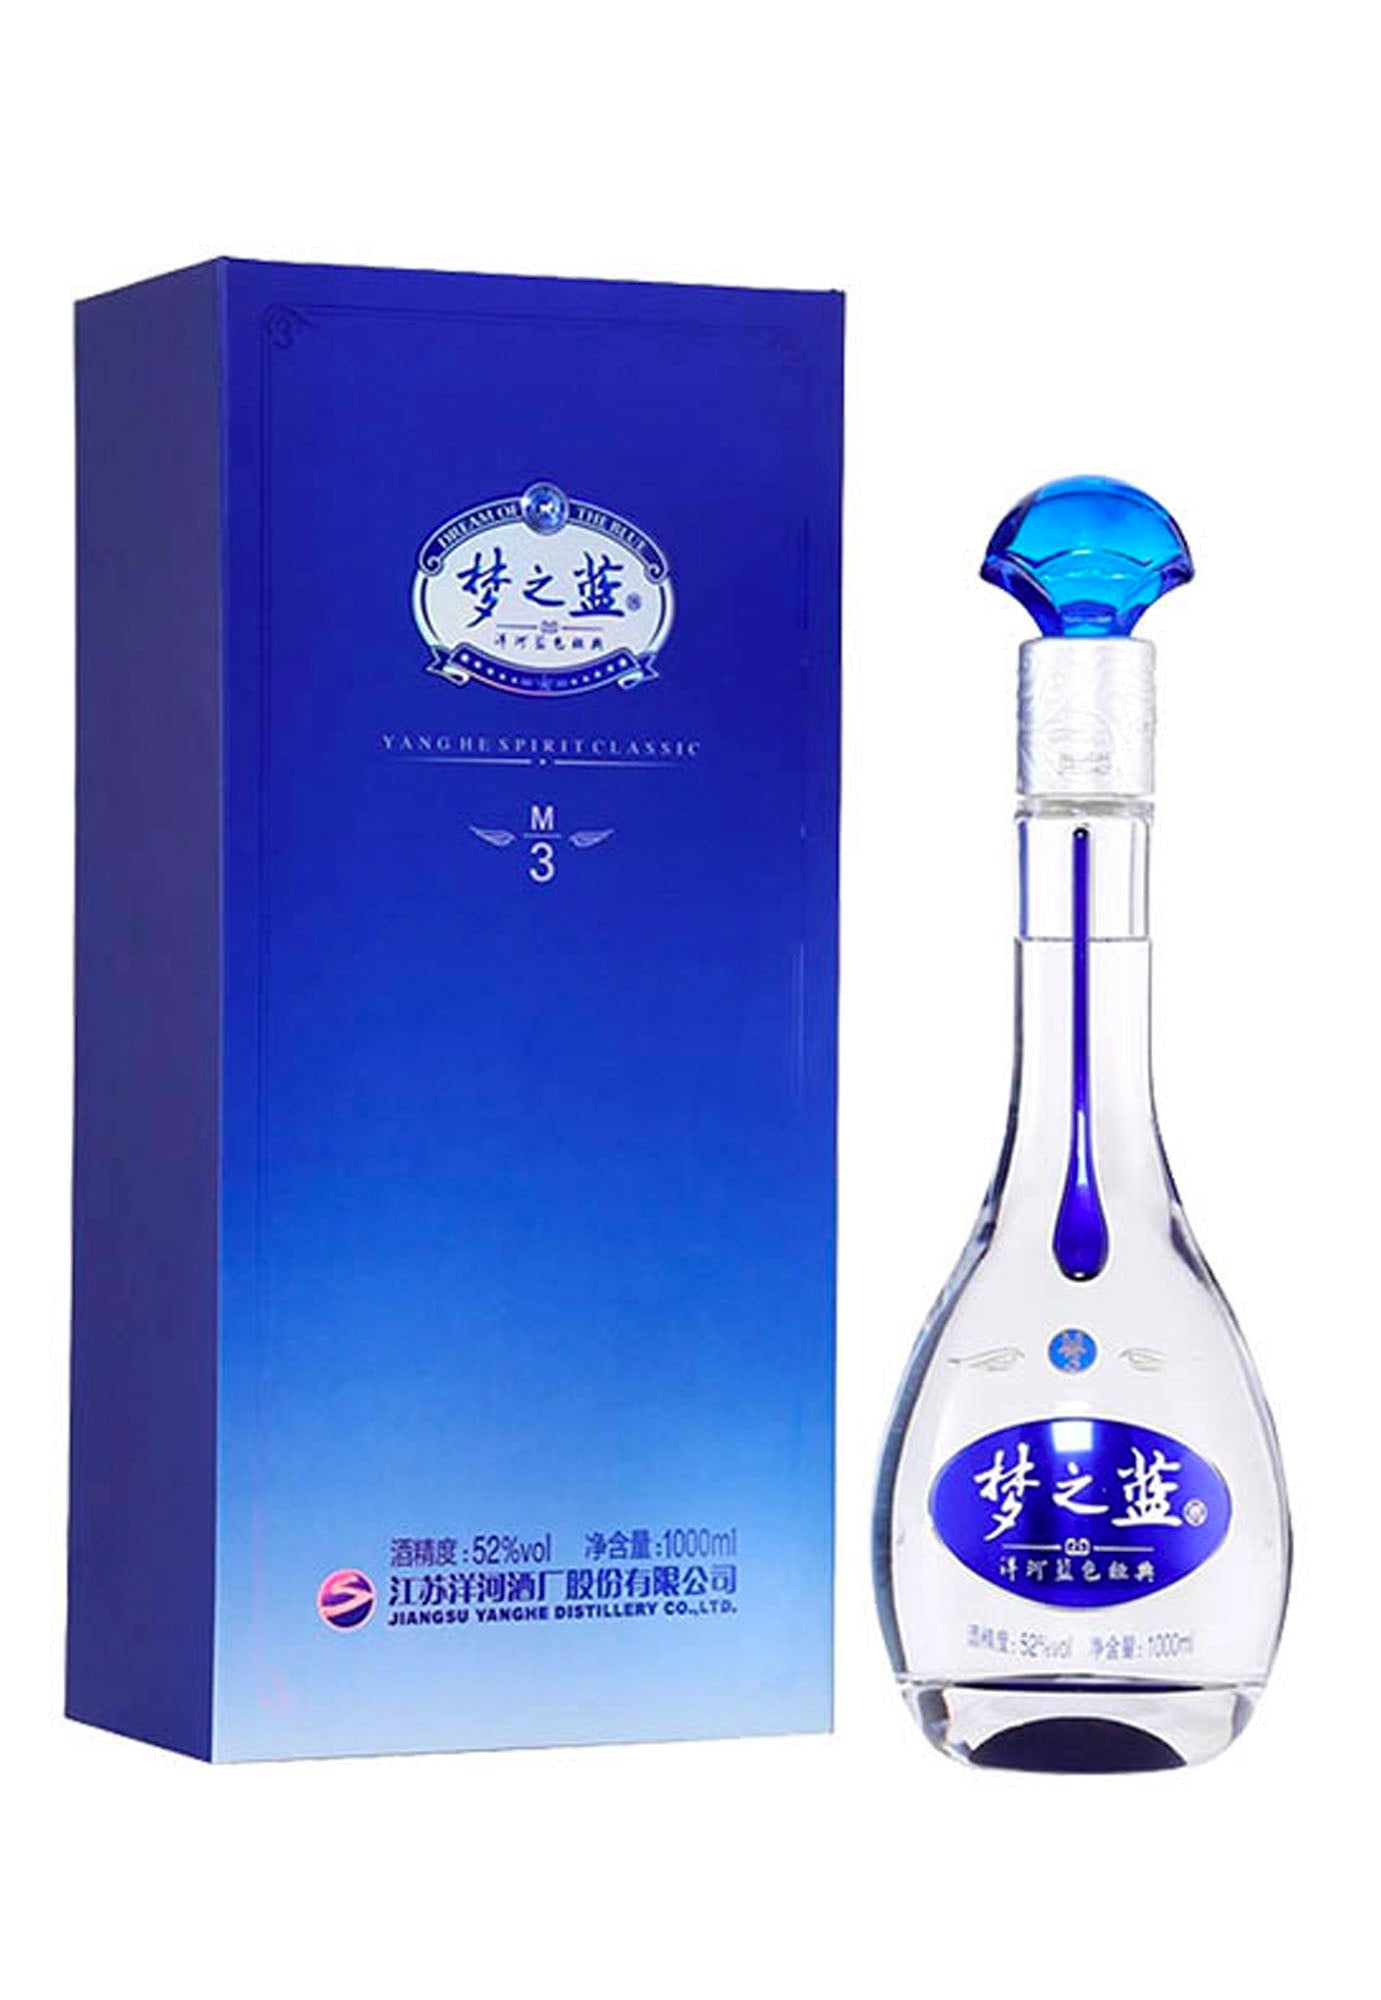 Jiangsu Yanghe Classic Dream Blue M3 Baijiu - 500 ml